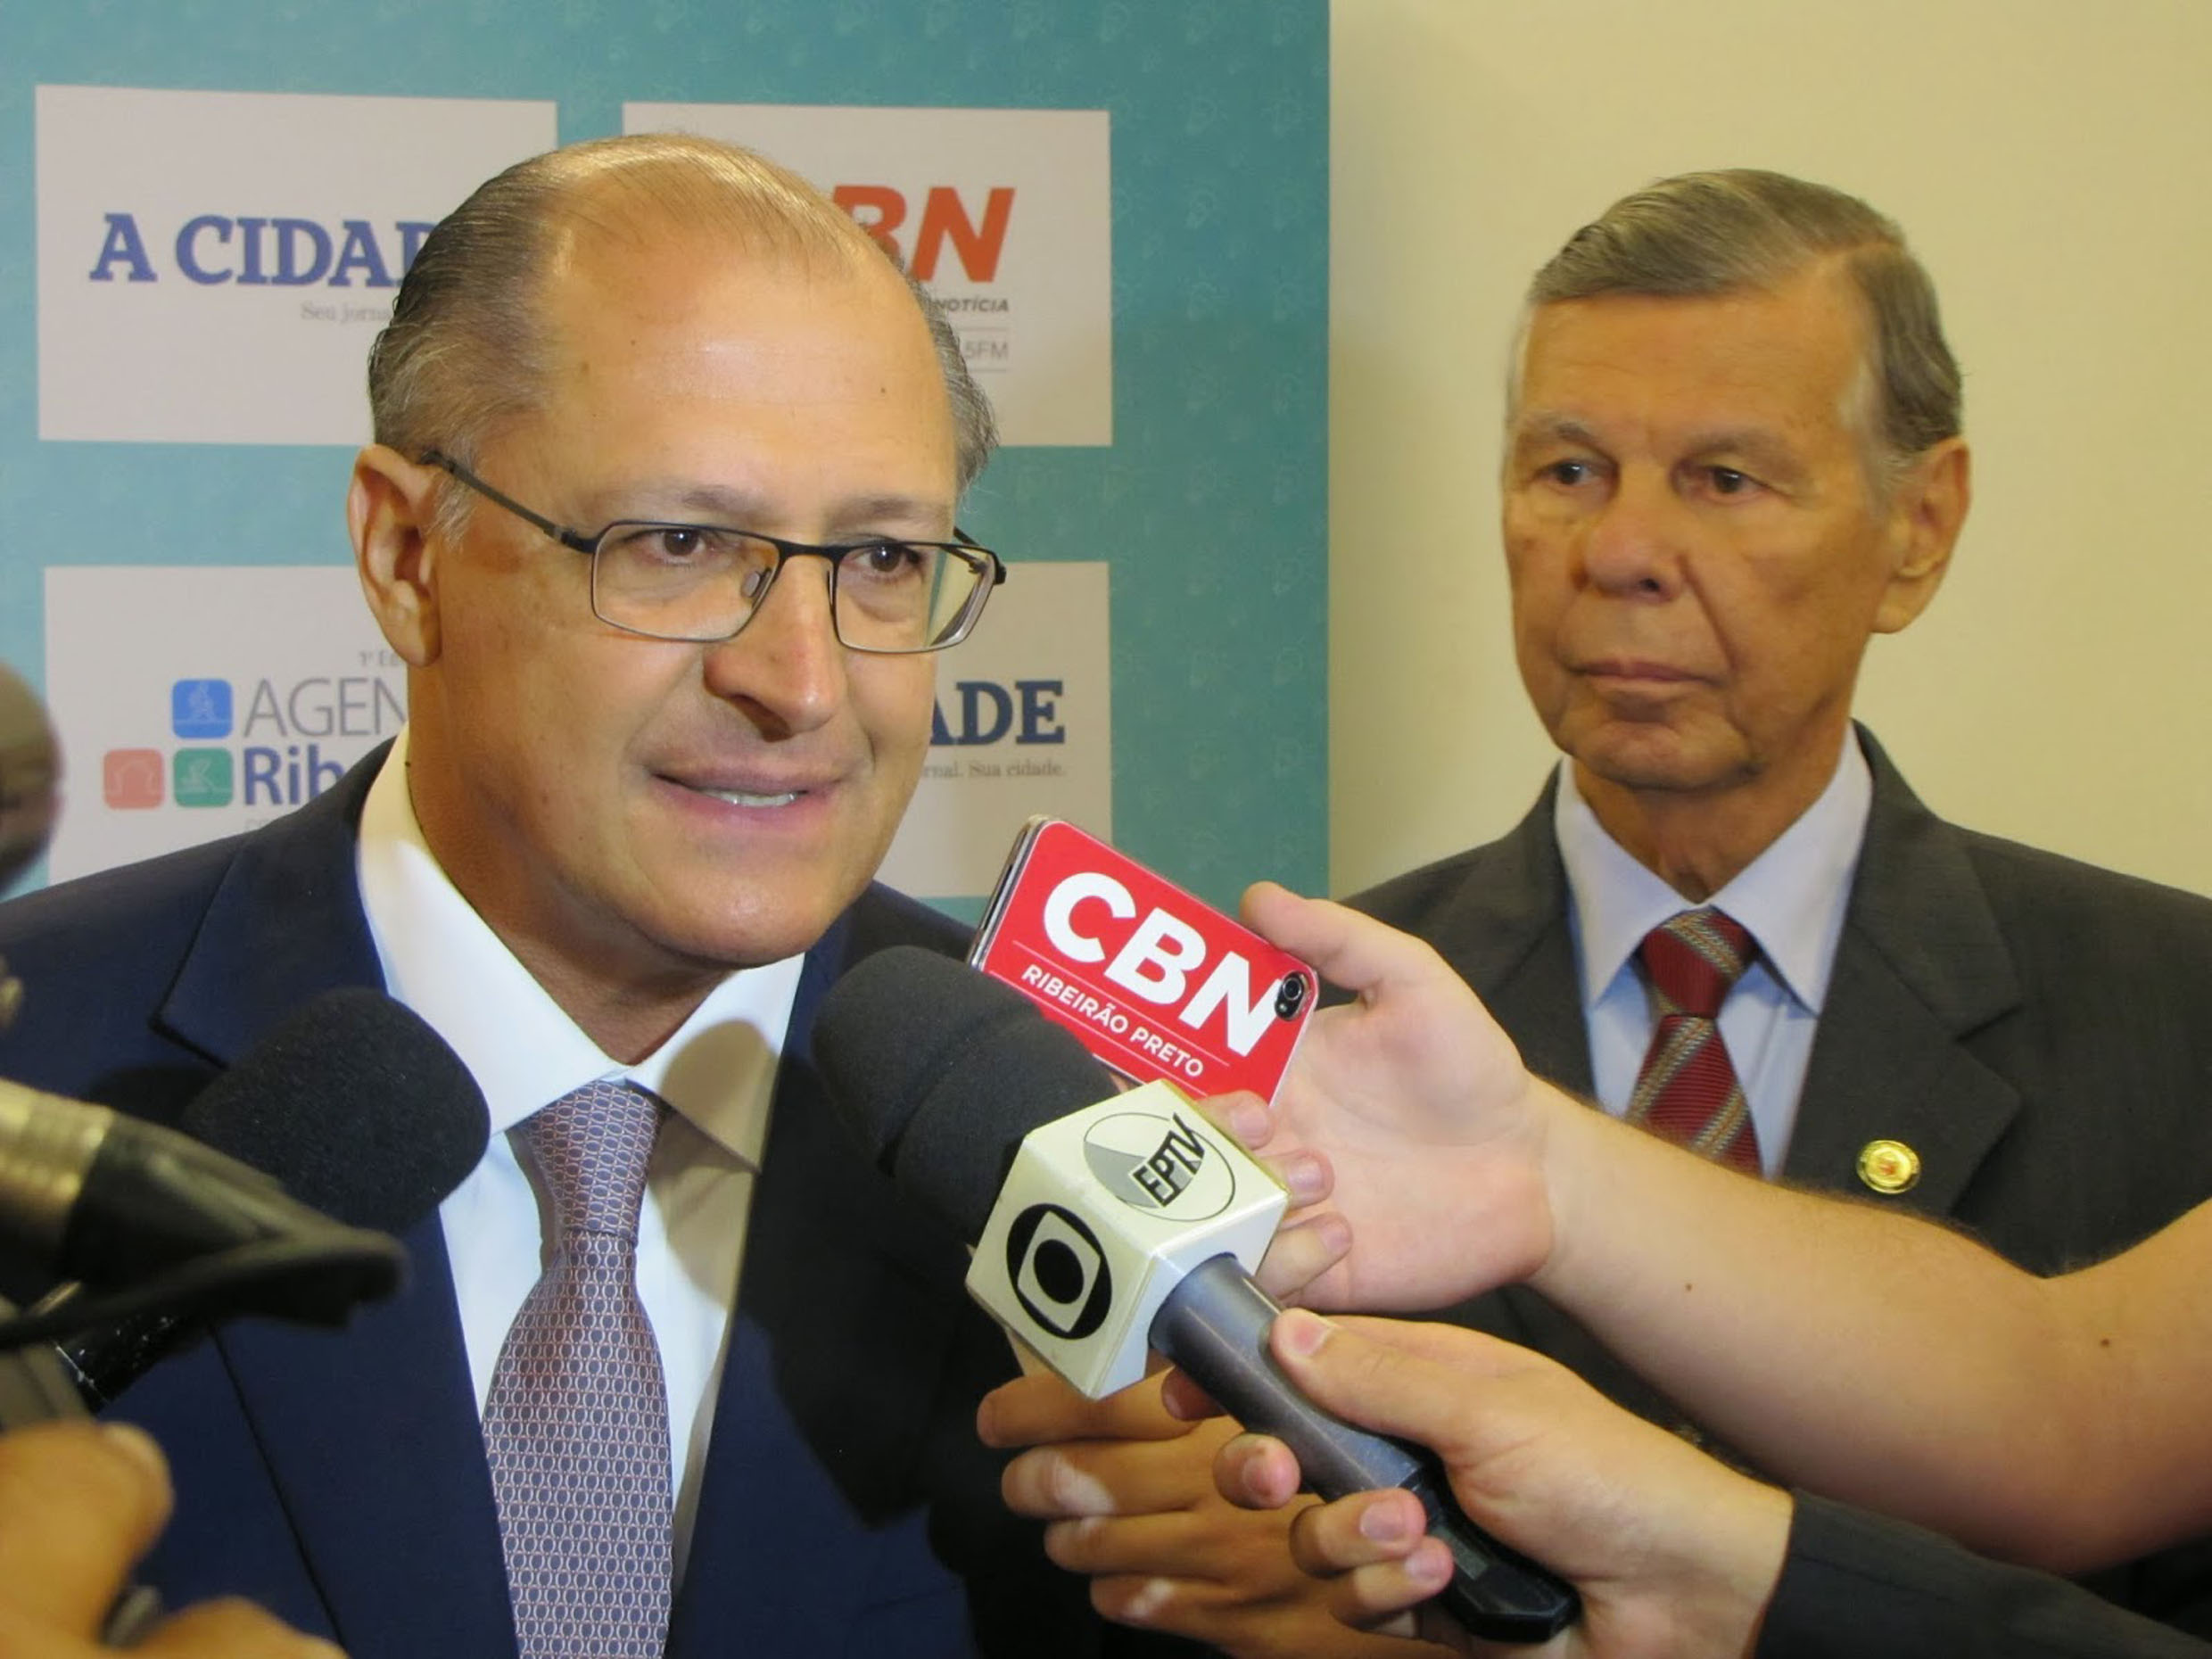 Alckmin observado por Gasparini em entrevista coletiva<a style='float:right;color:#ccc' href='https://www3.al.sp.gov.br/repositorio/noticia/N-05-2014/fg162568.jpg' target=_blank><i class='bi bi-zoom-in'></i> Clique para ver a imagem </a>